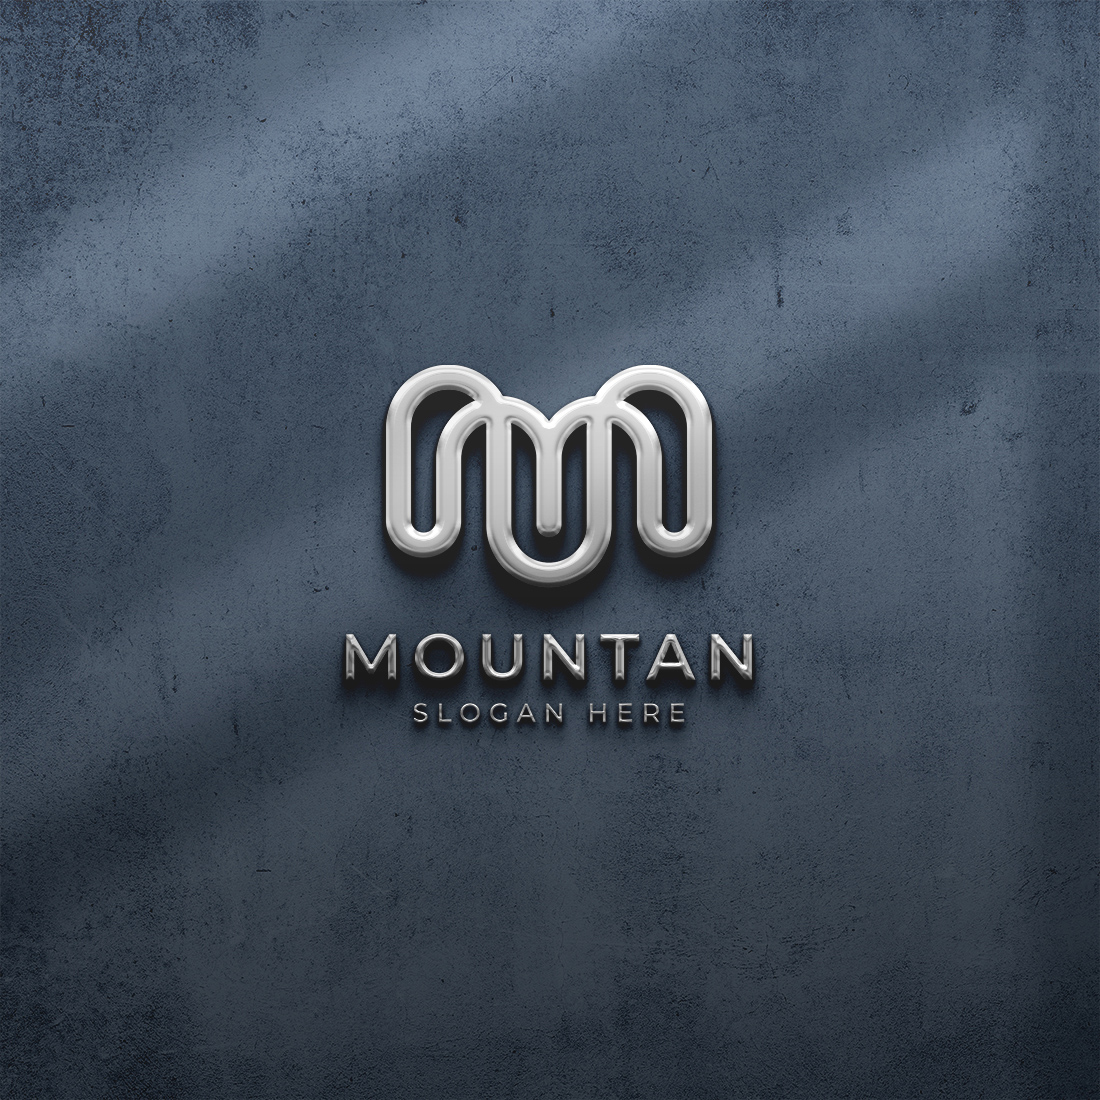 Logo for a company called mountain.